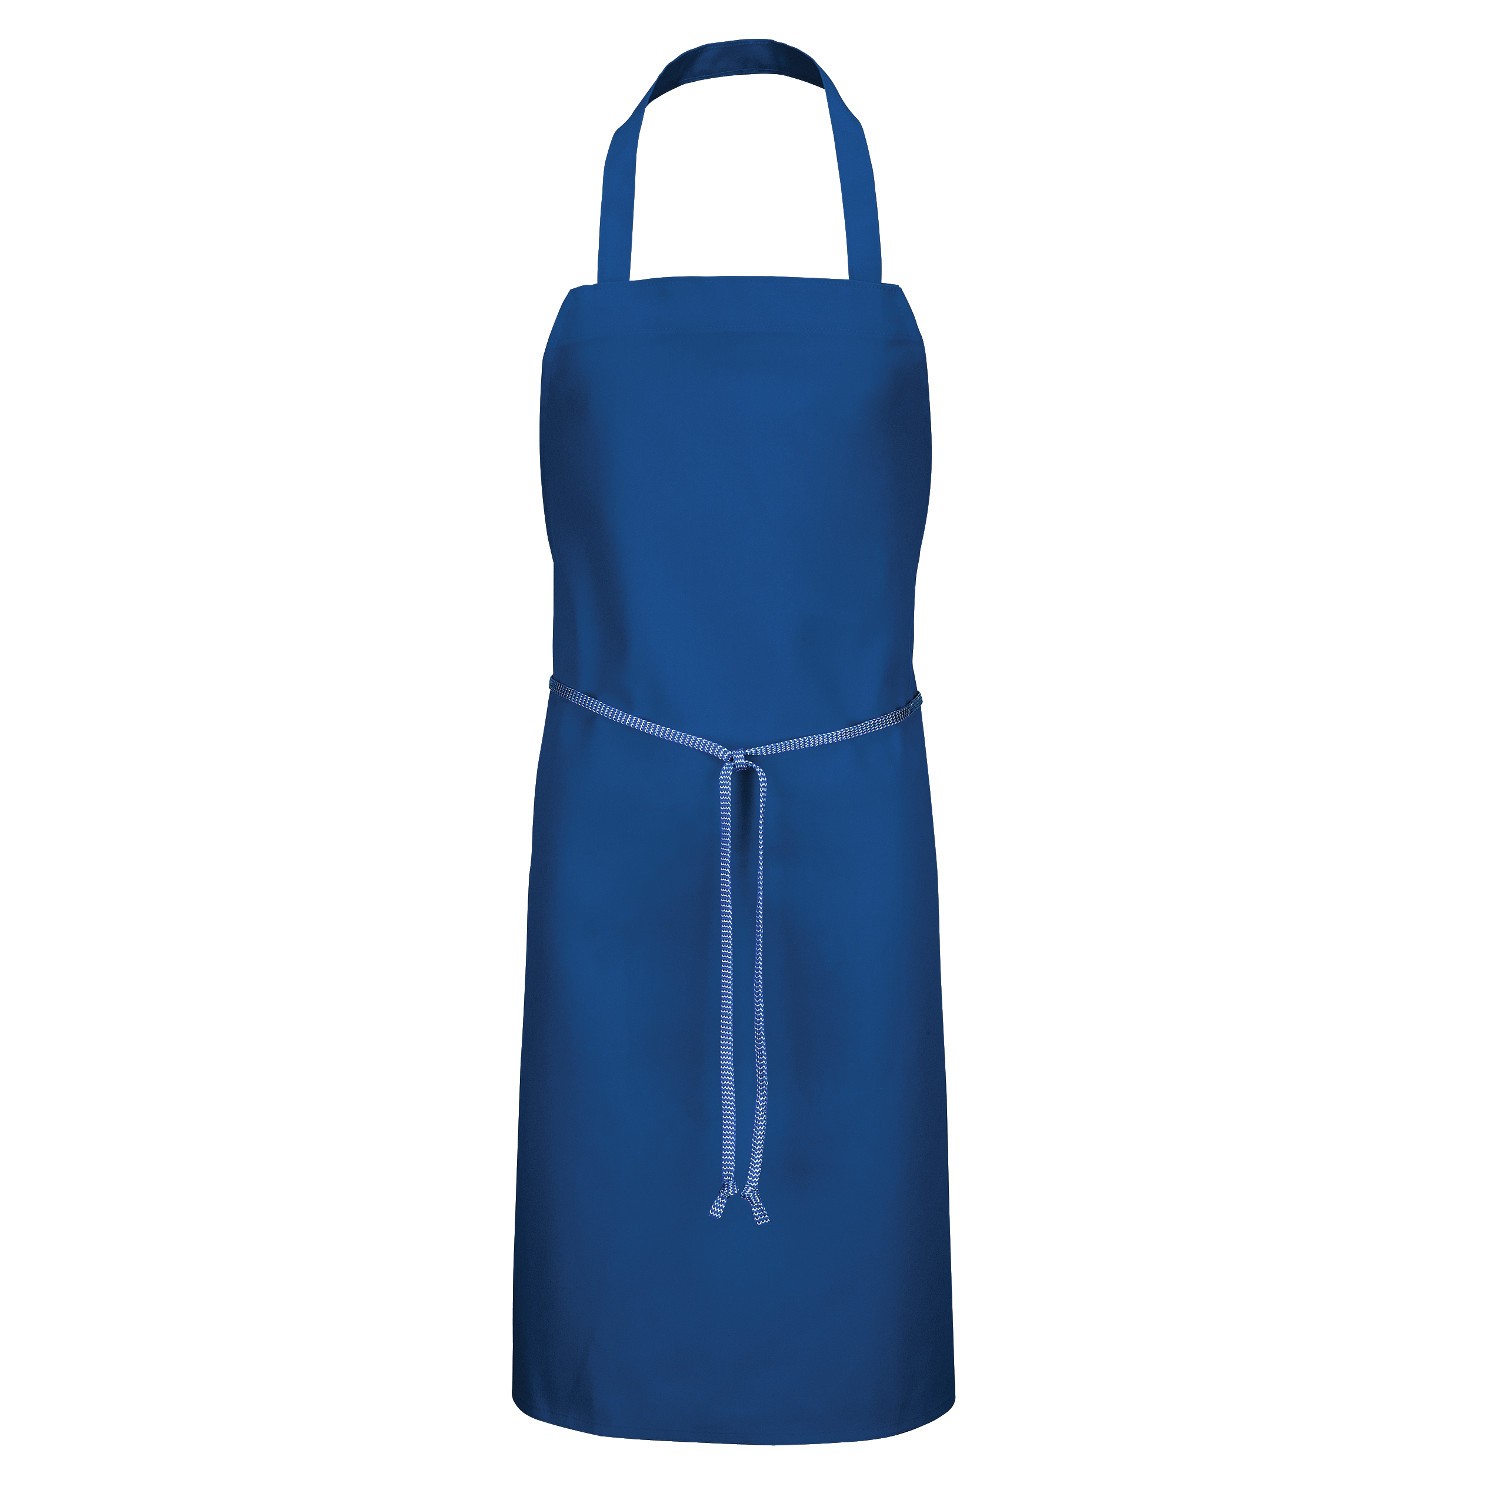 Chef Designs 1430 Standard Bib Apron - Royal Blue | FullSource.com